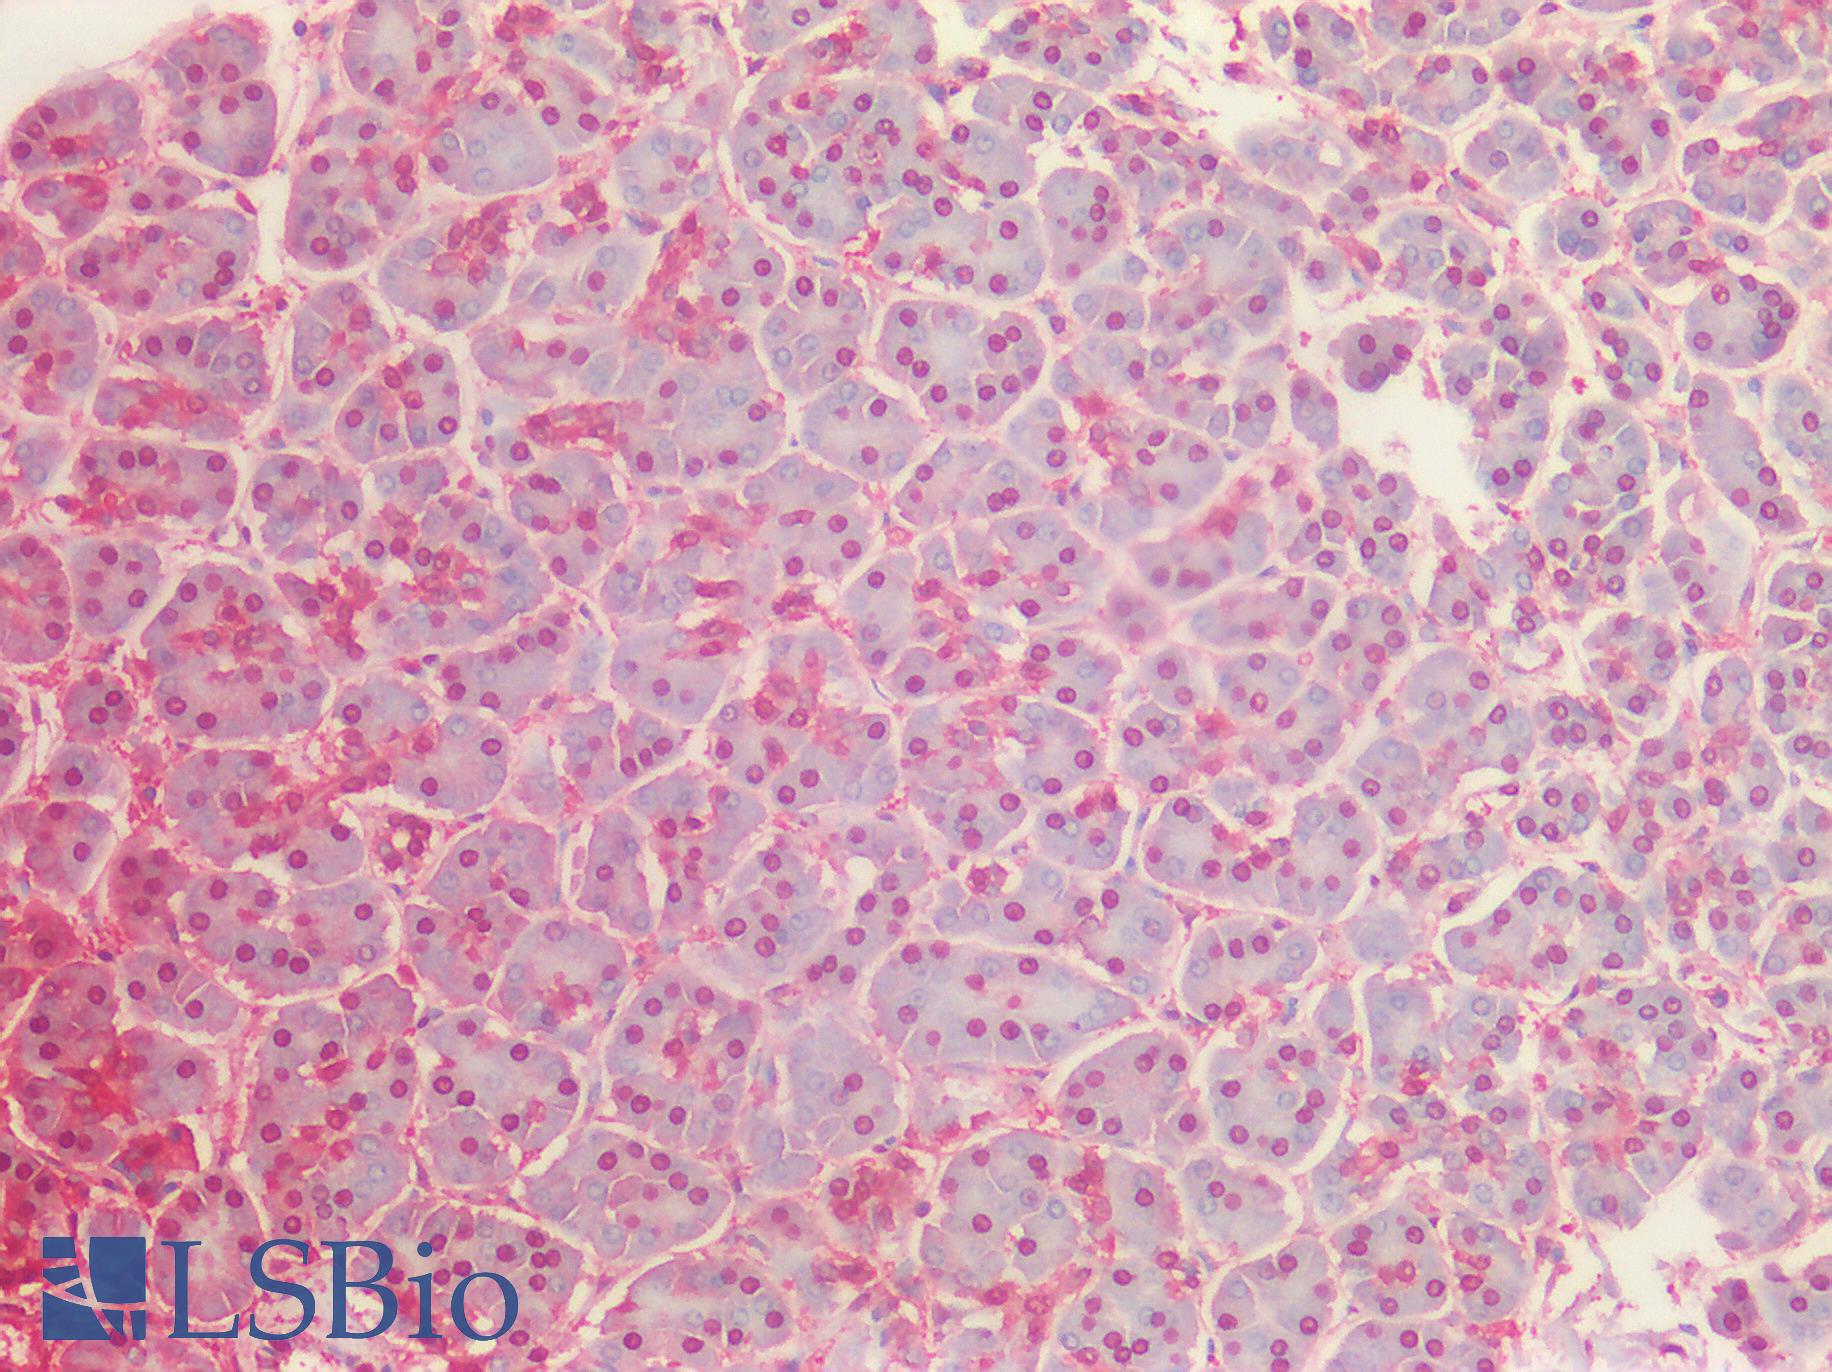 GAPDH Antibody - Human Pancreas: Formalin-Fixed, Paraffin-Embedded (FFPE)